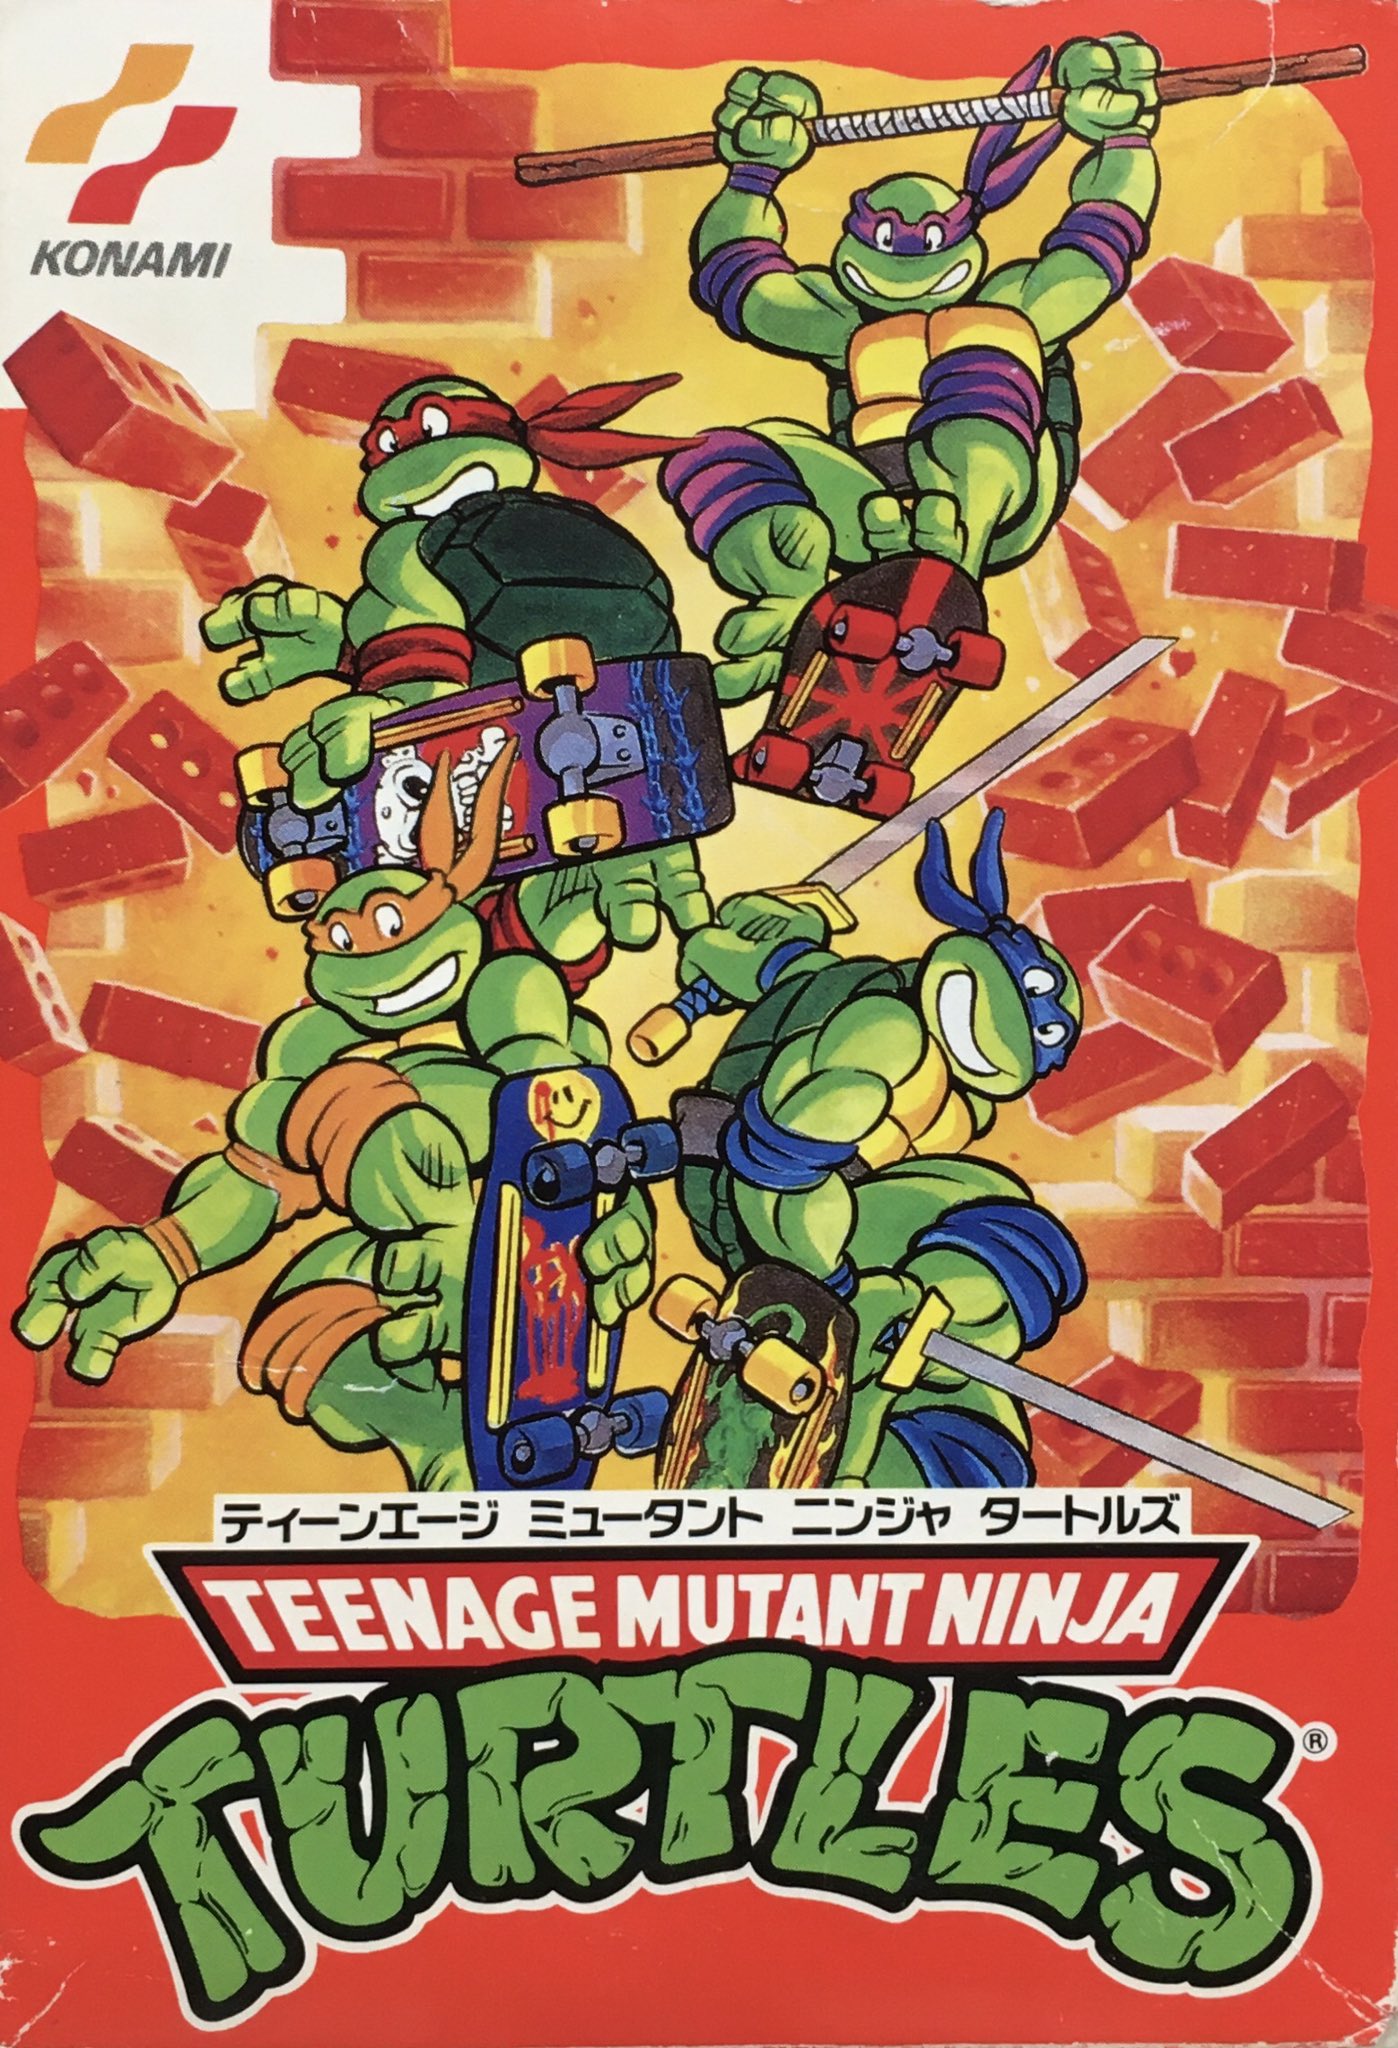 Turtles nes. Черепашки ниндзя 2 NES. Teenage Mutant Ninja Turtles 1989 обложка. TMNT NES обложка. Teenage Mutant Ninja Turtles: the Arcade game.